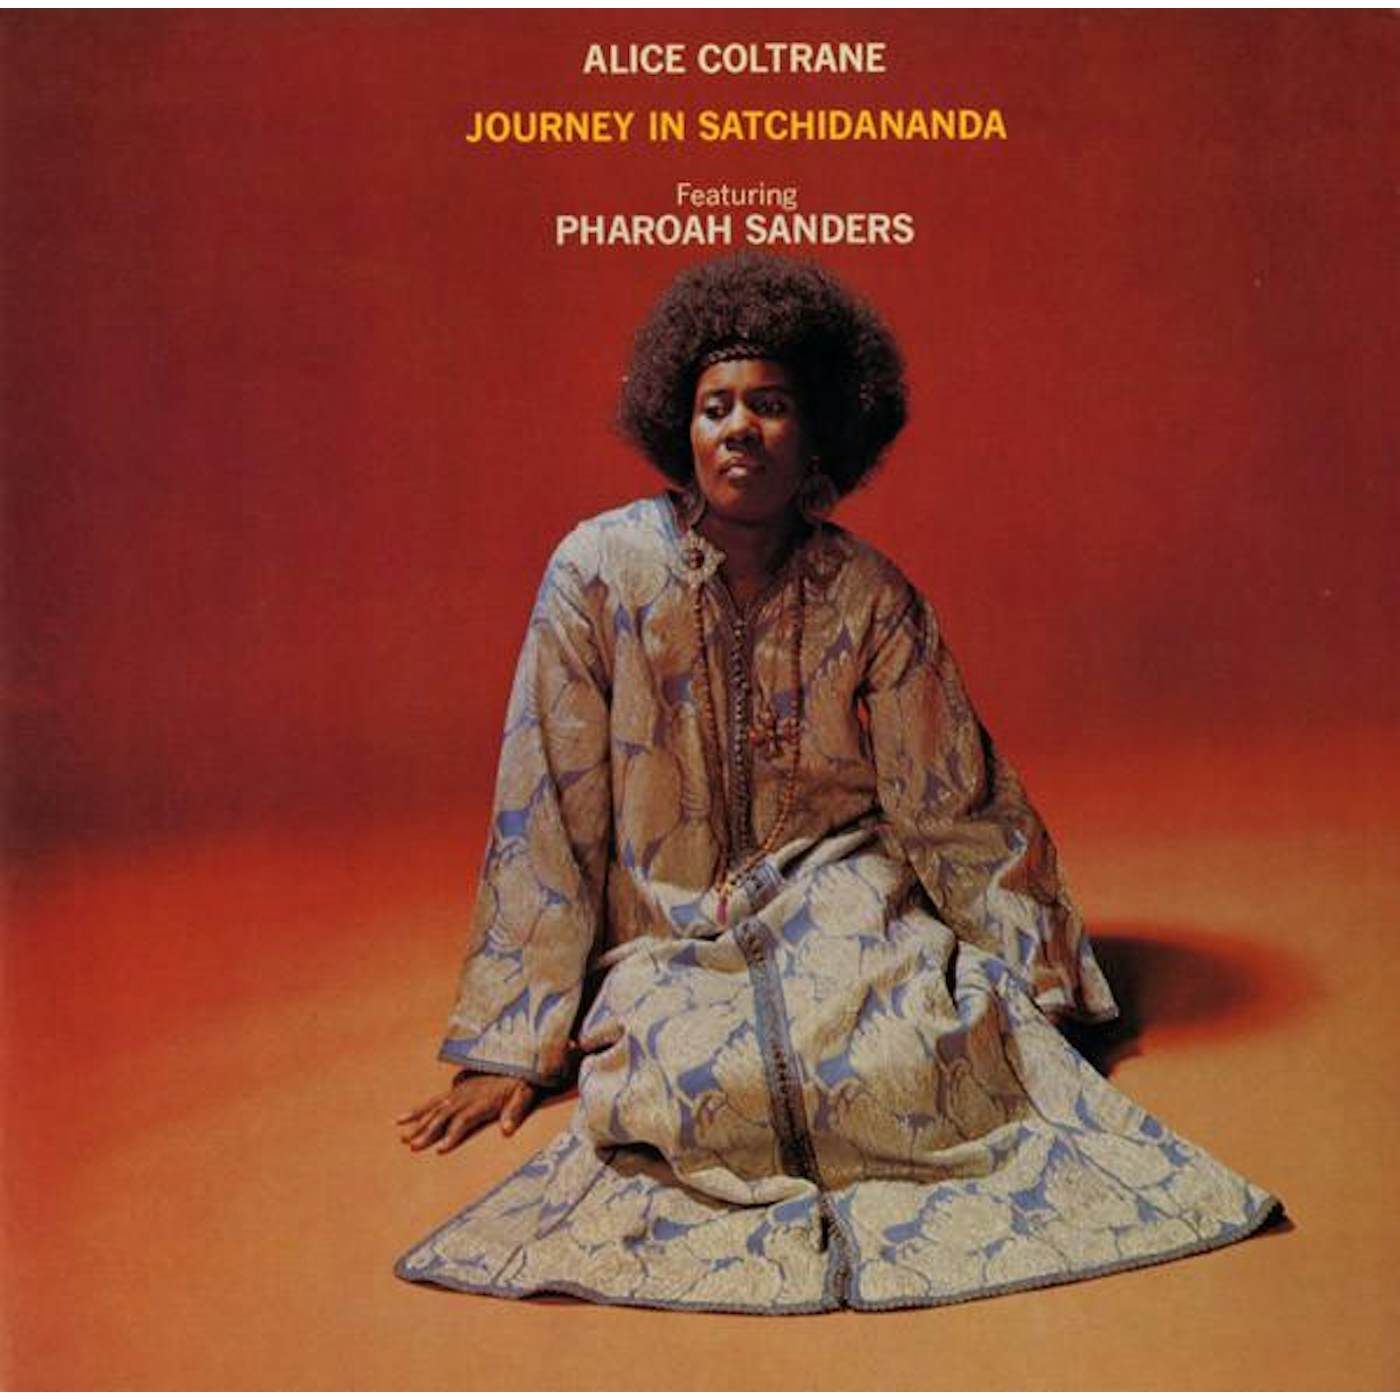 Alice Coltrane JOURNEY IN SATCHIDANANDA Vinyl Record